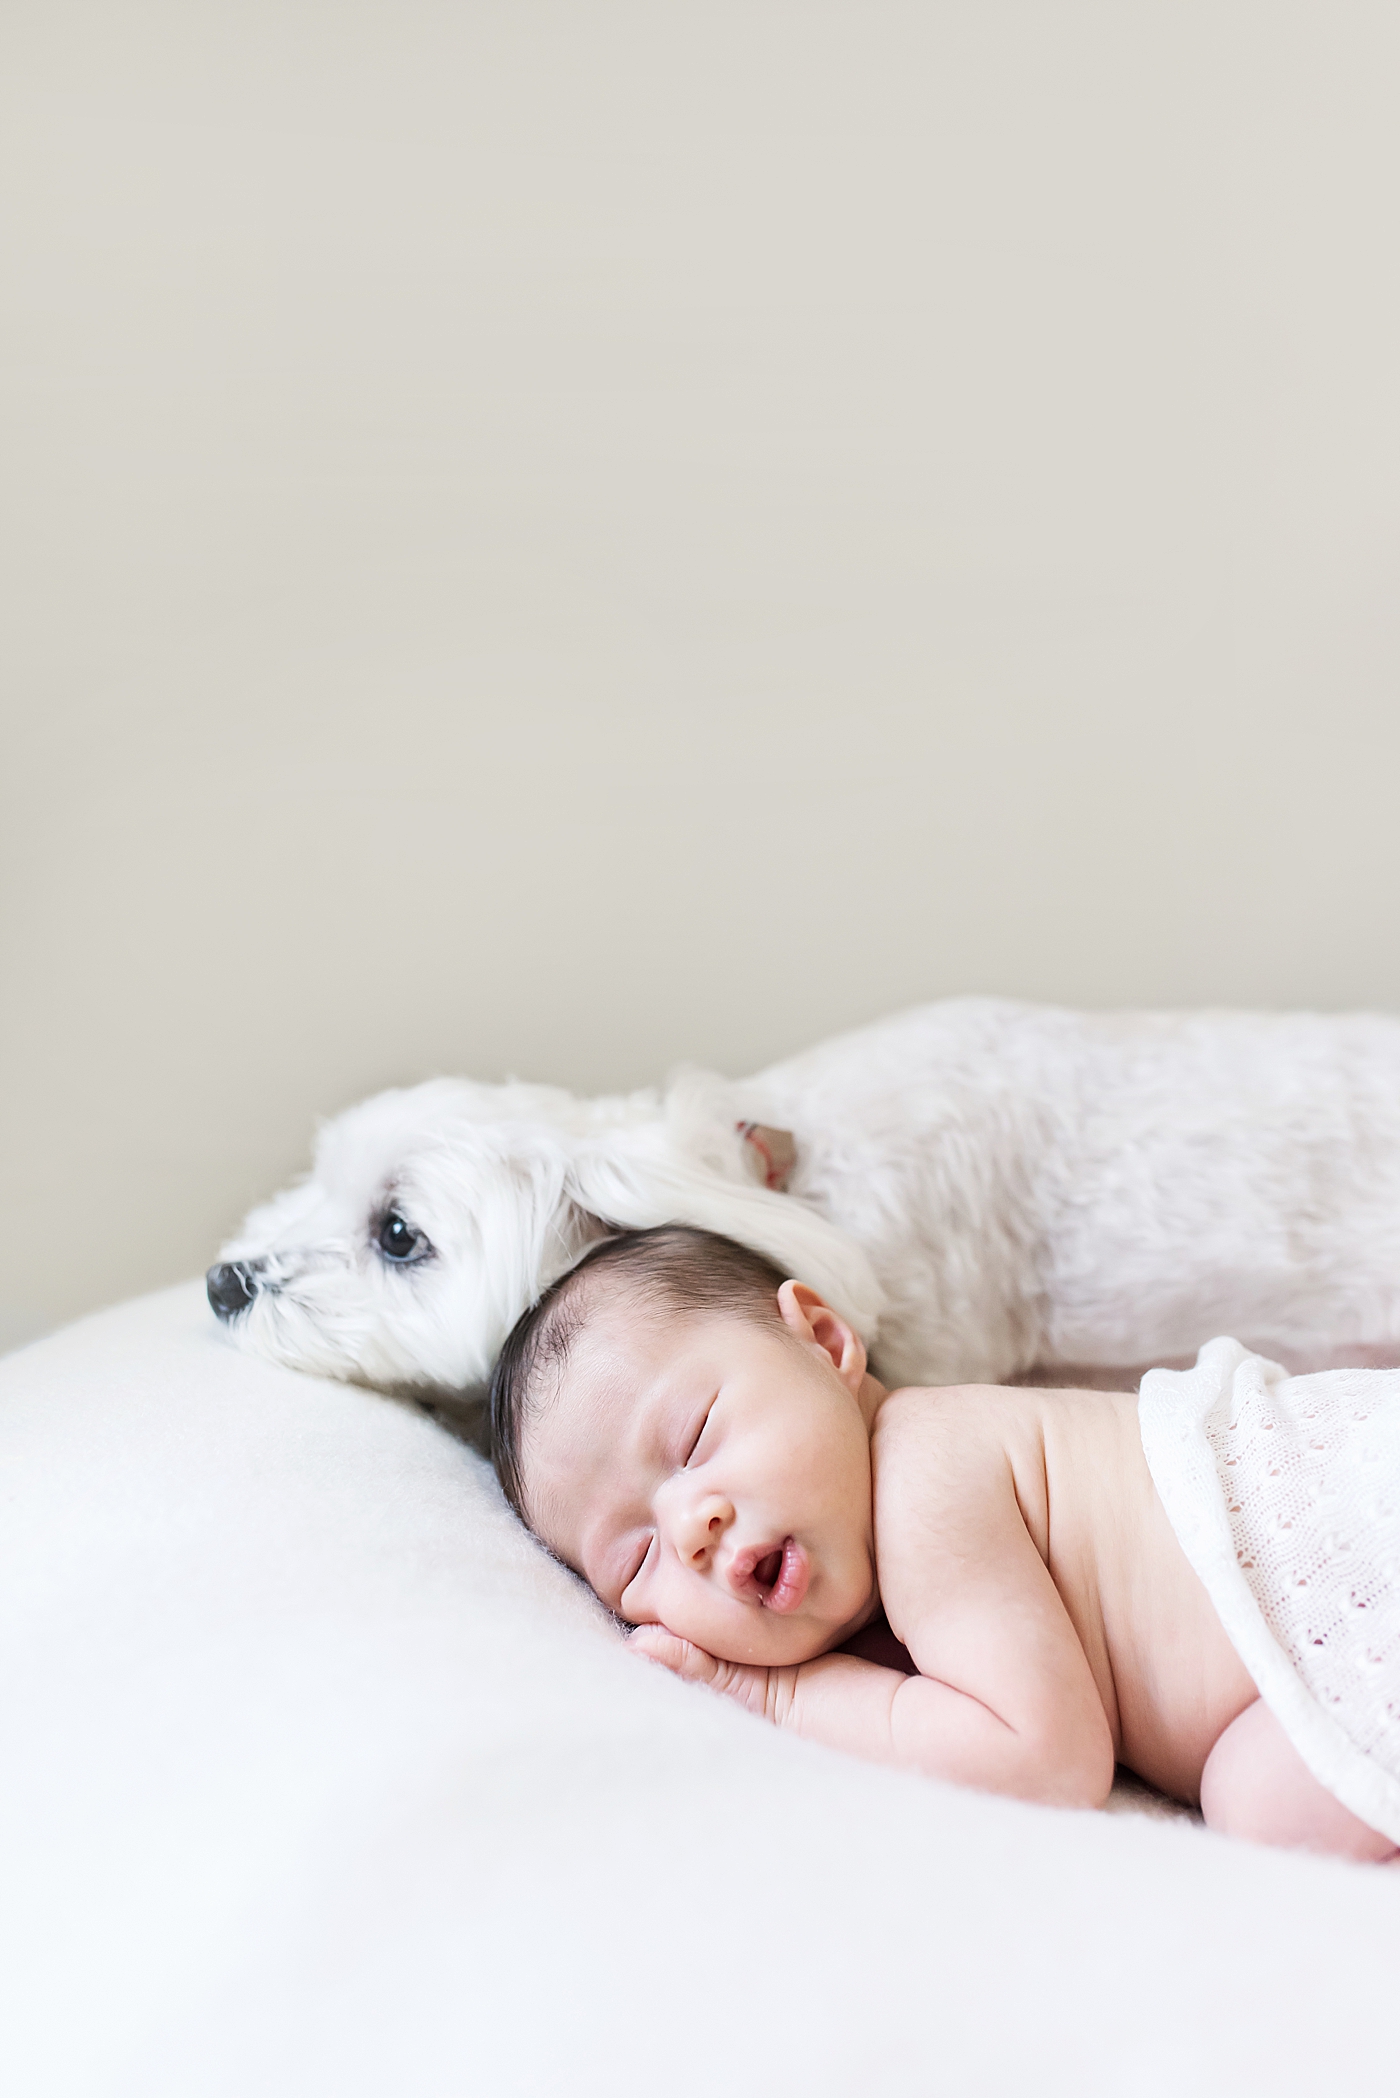 Fluffy white dog laying beside sleeping newborn baby girl | Photo by Anna Wisjo Photography